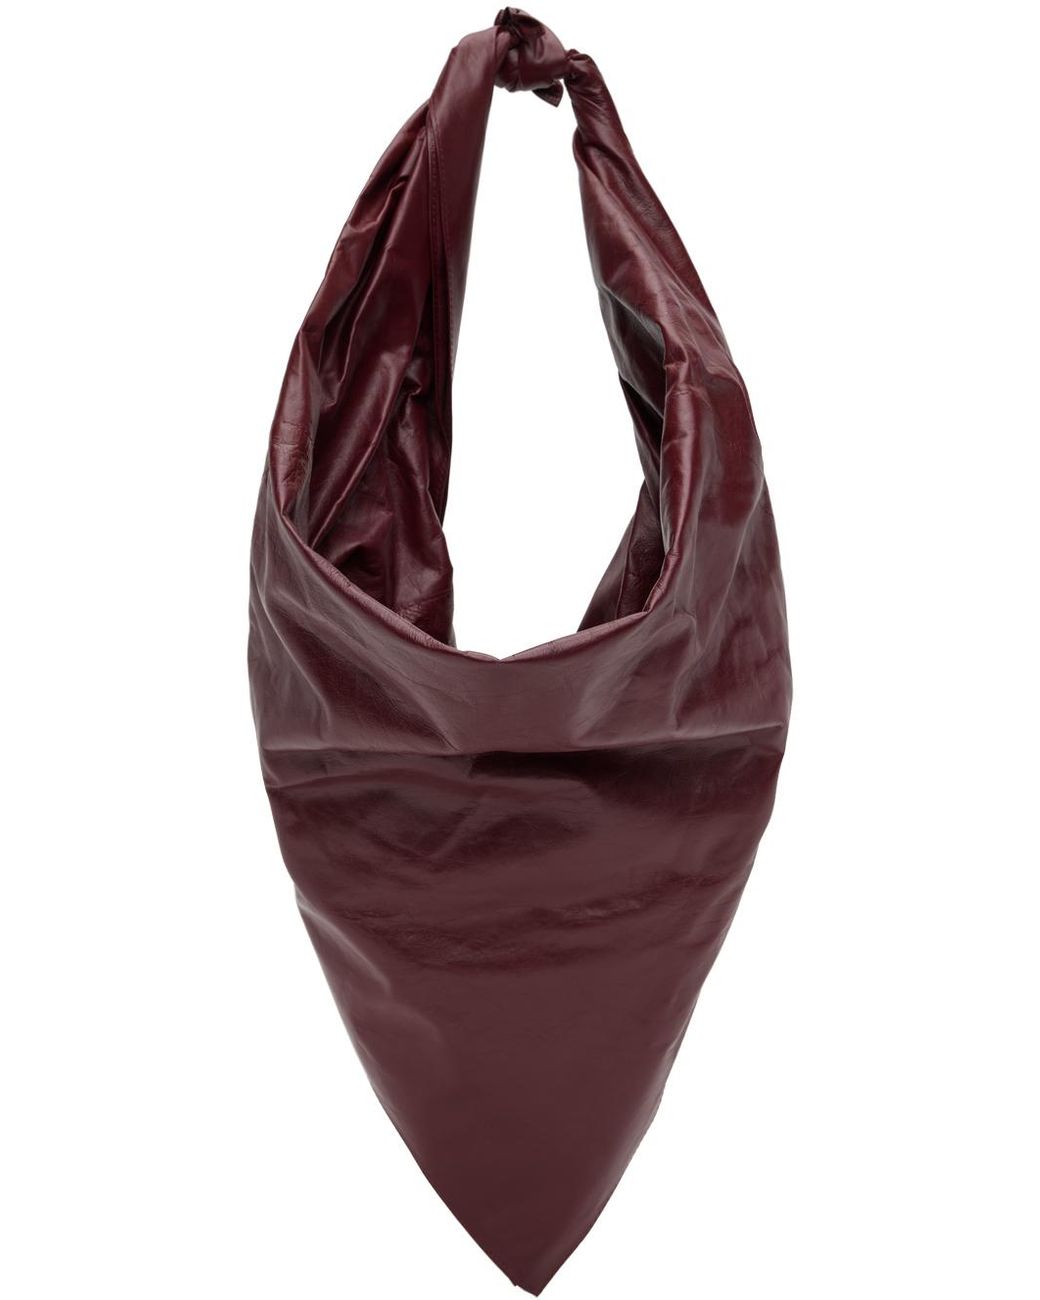 Bottega Veneta Roma Medium Intrecciato Leather Tote Bag Burgundy